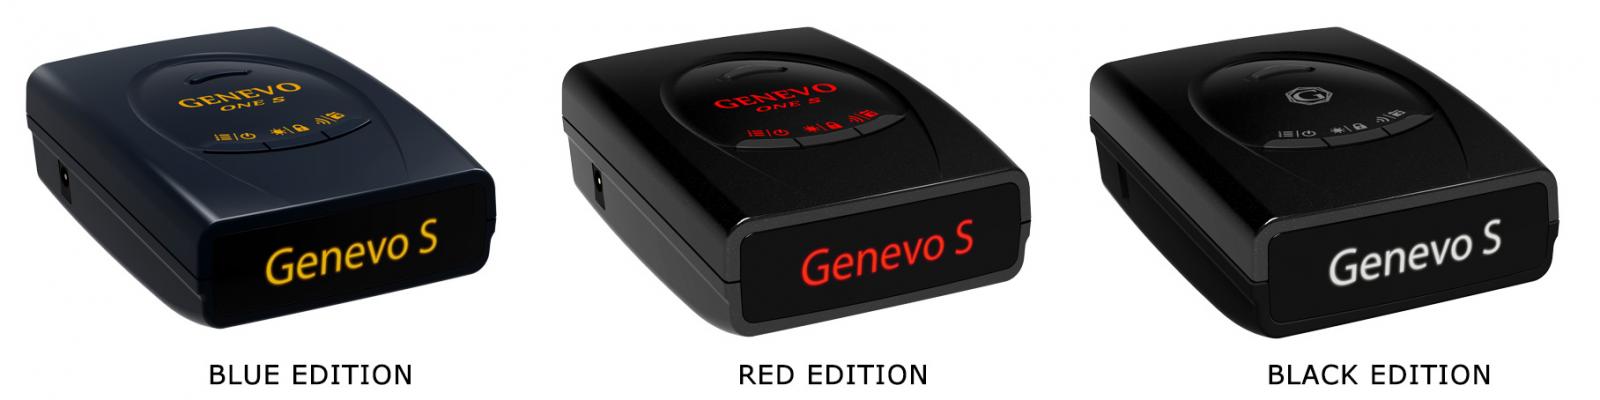 genevo-one-s-blue-red-black-edition.jpg